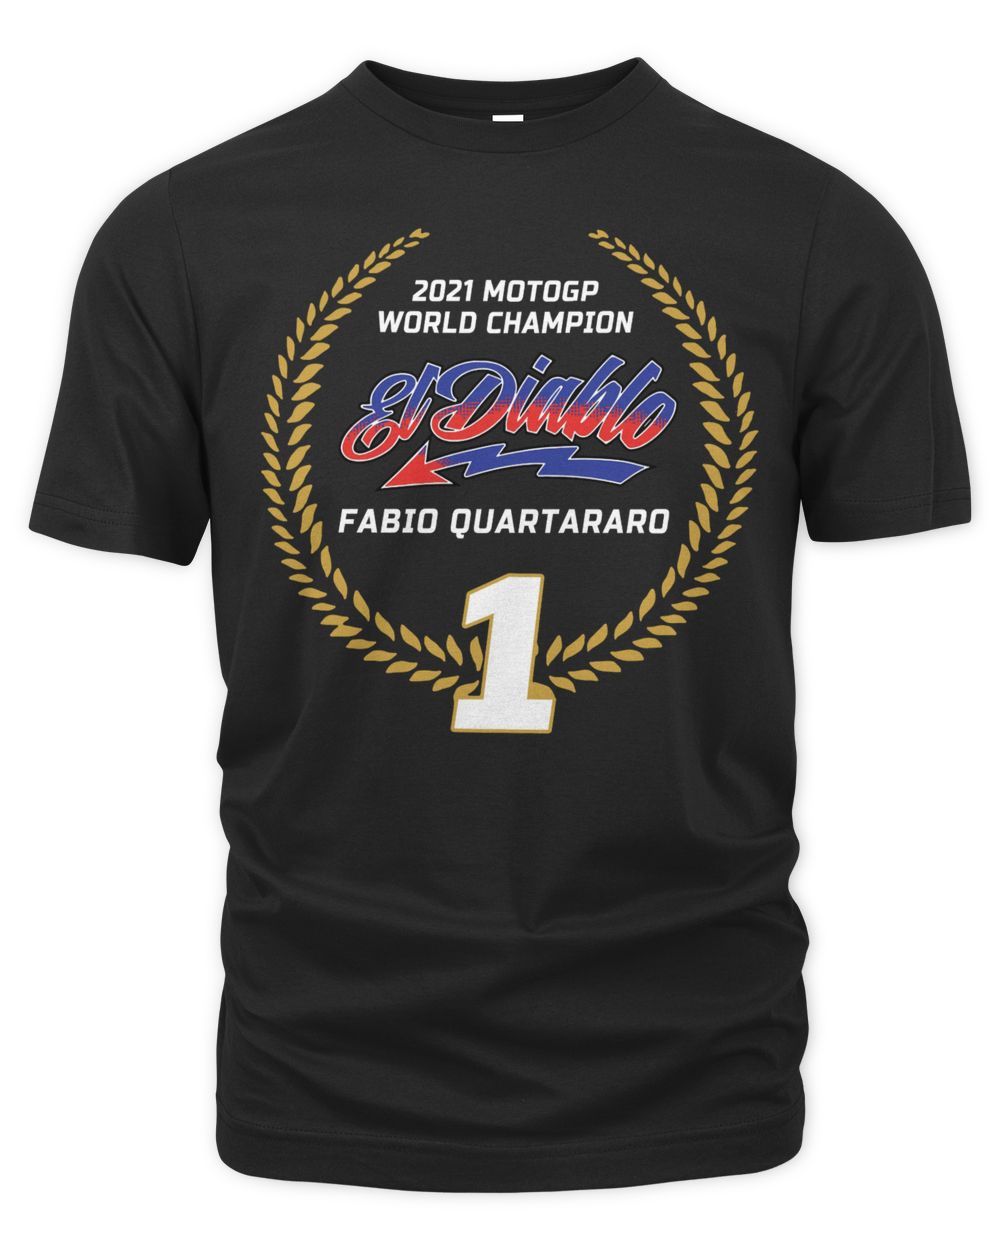 FABIO QUARTARARO - MOTOGP WORLD CHAMPION 2021 BLACK - T-SHIRT